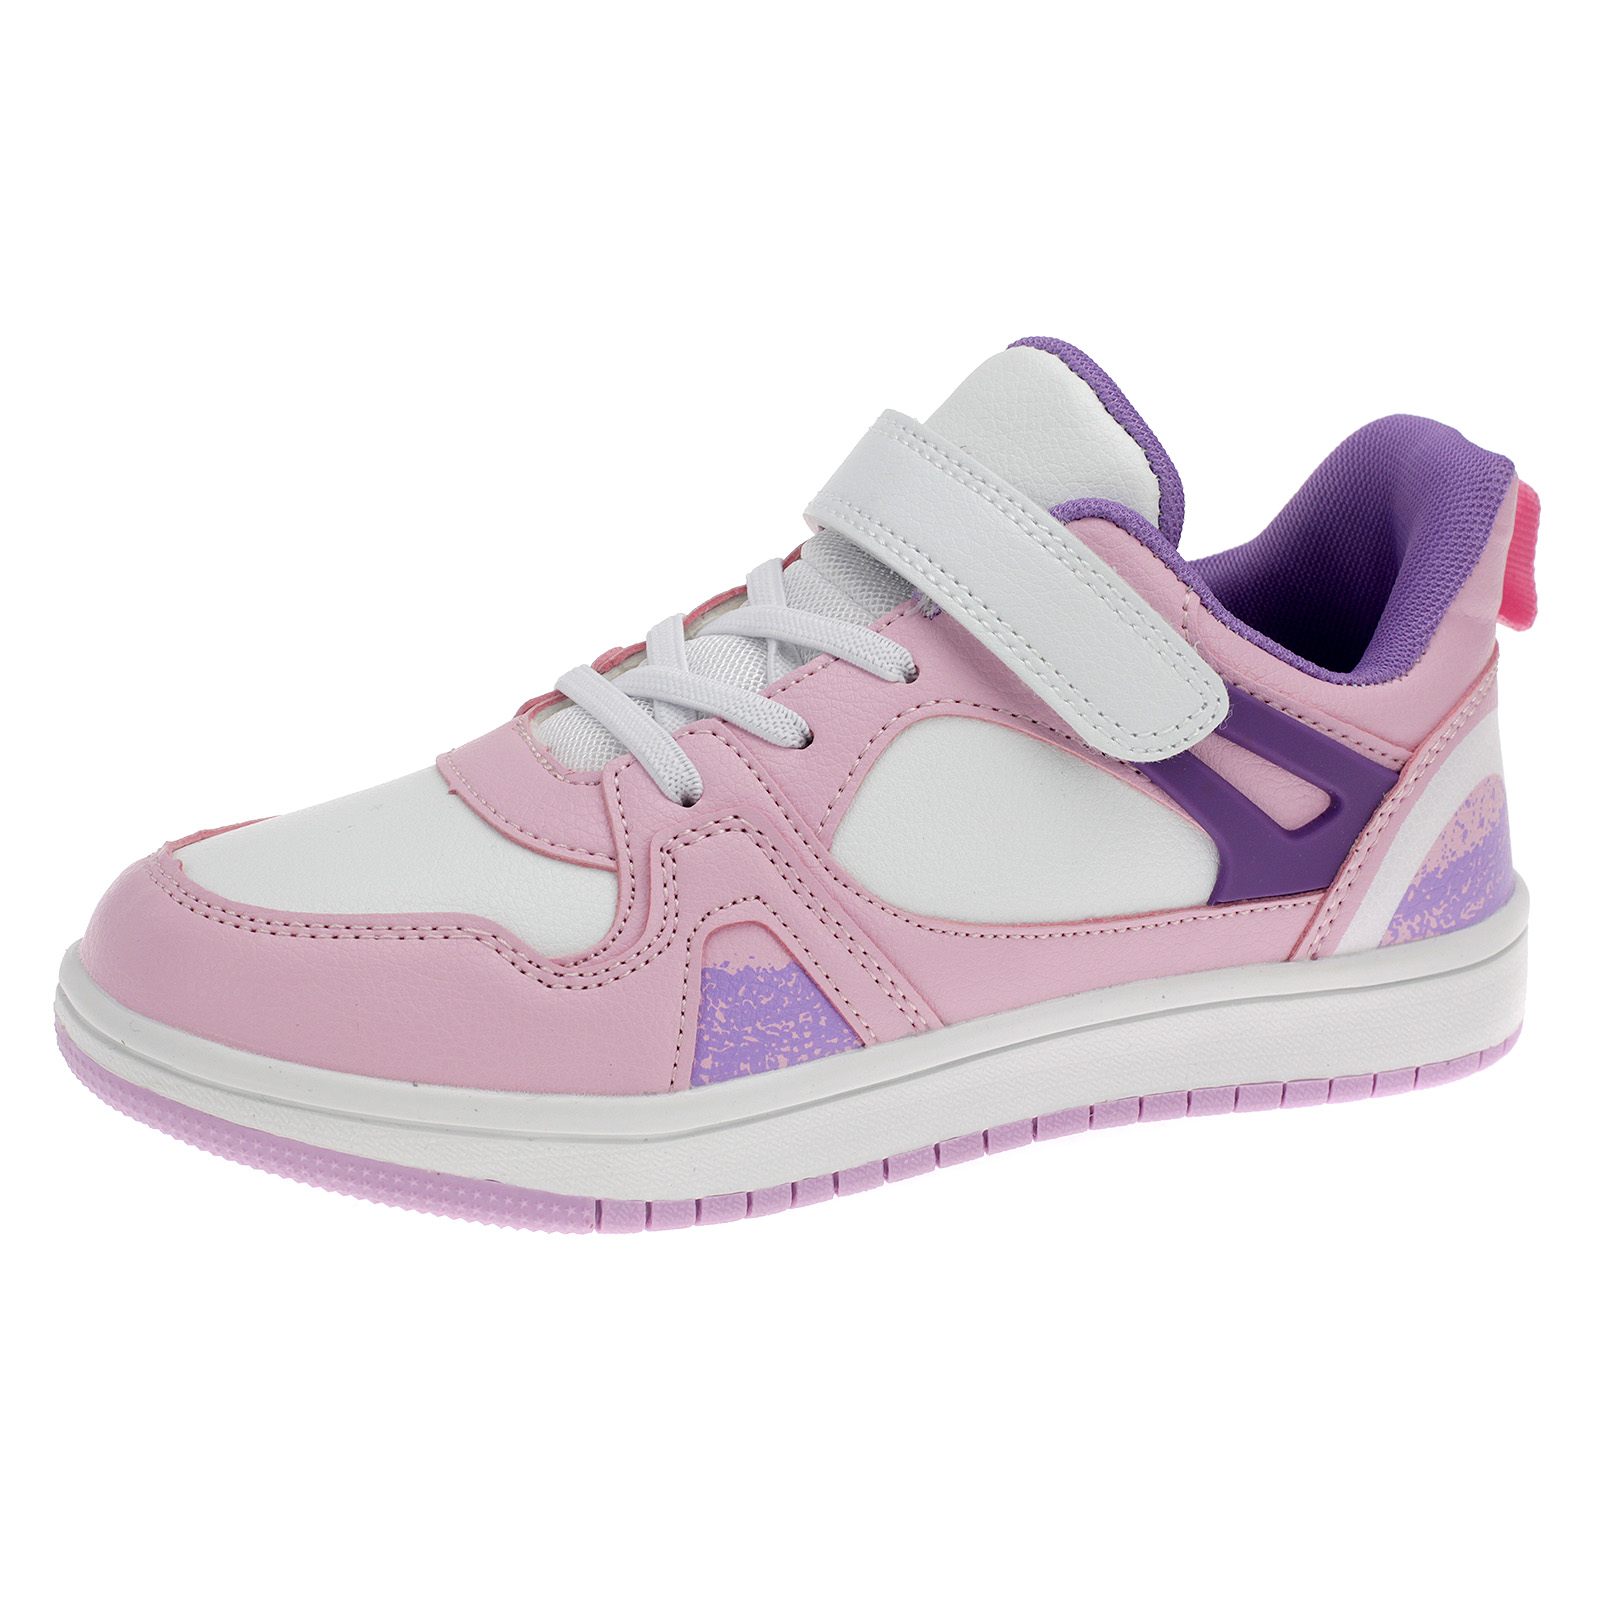 Kinder Sportschuhe Sneaker Weiß Pink Lila 2253